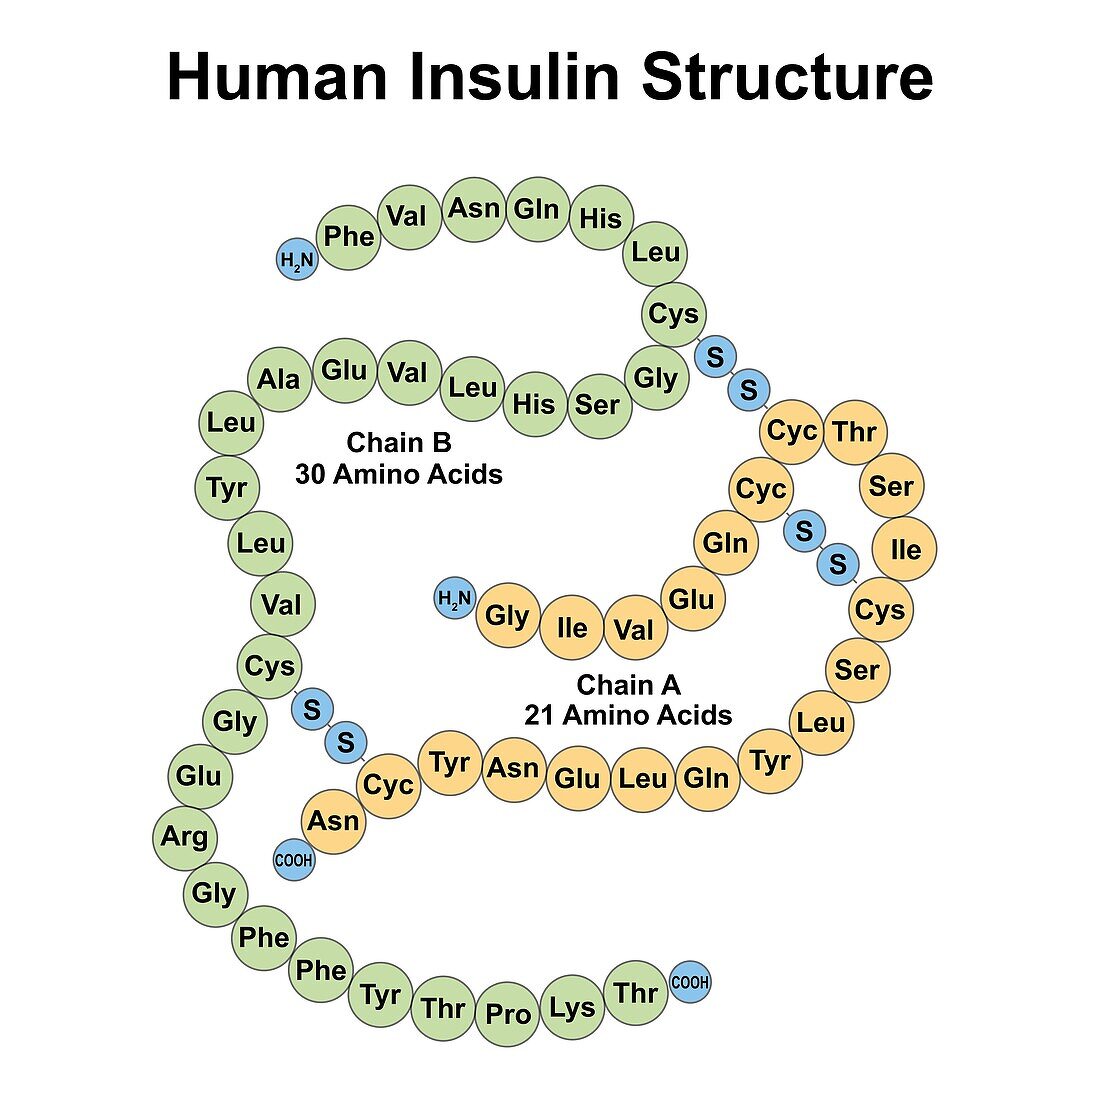 Human insulin structure, illustration